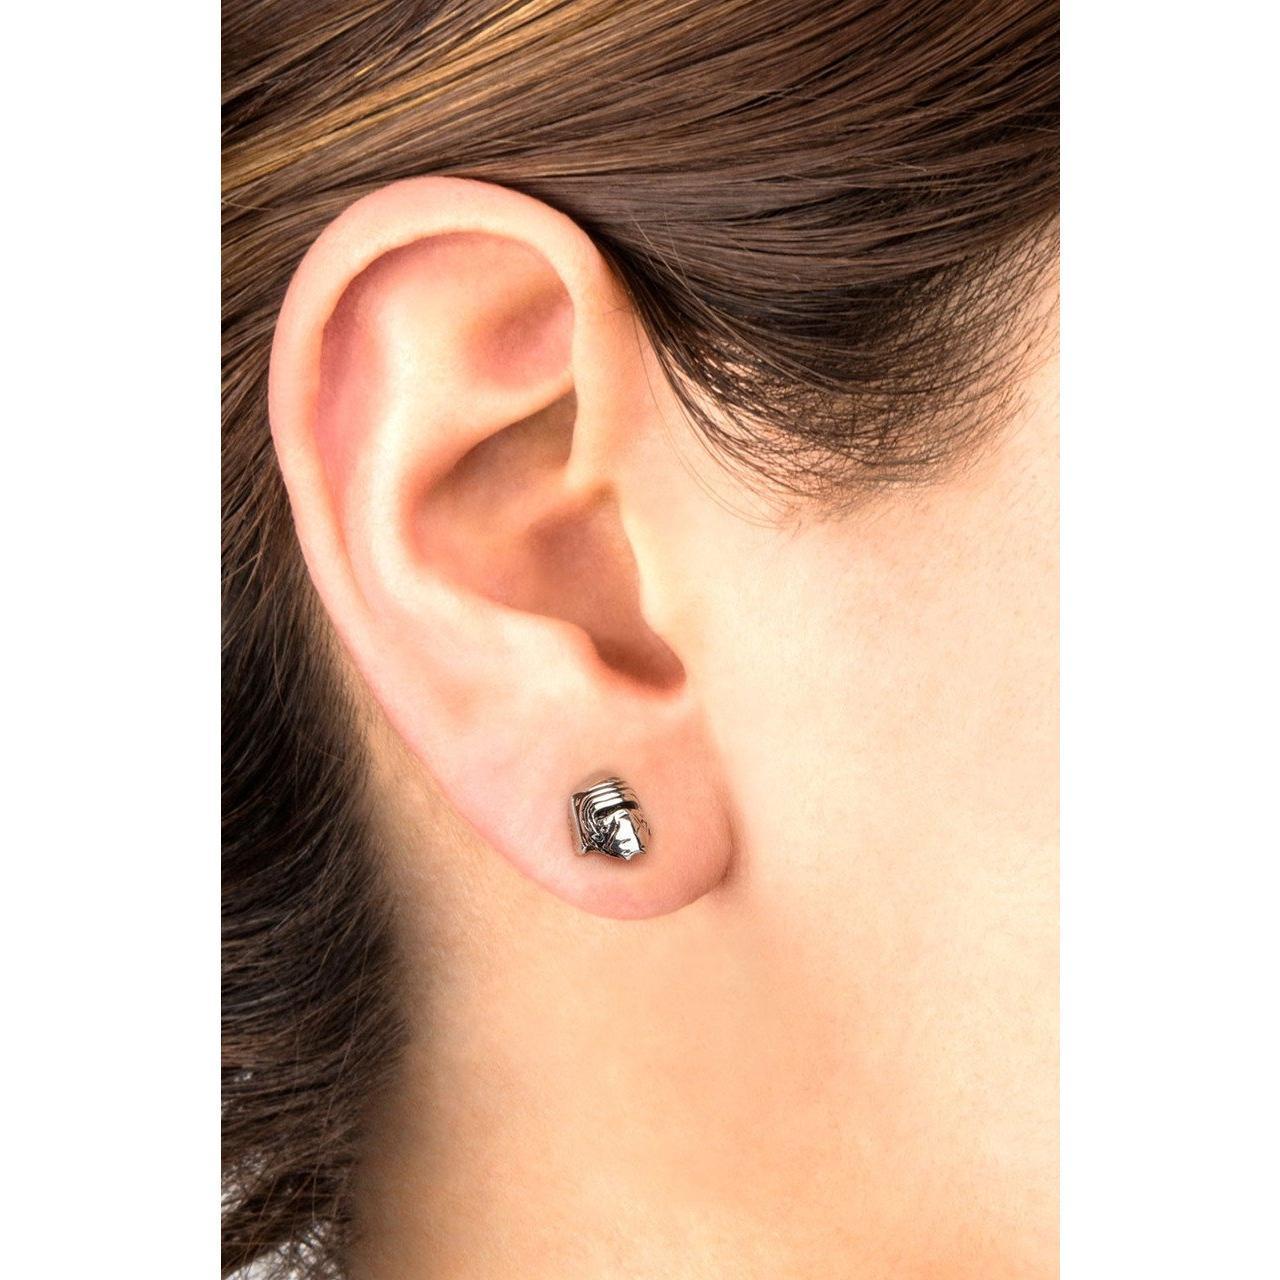 Star Wars Kylo Ren Earrings - Chrome - Mister SFC - Fashion Jewelry - Fashion Accessories